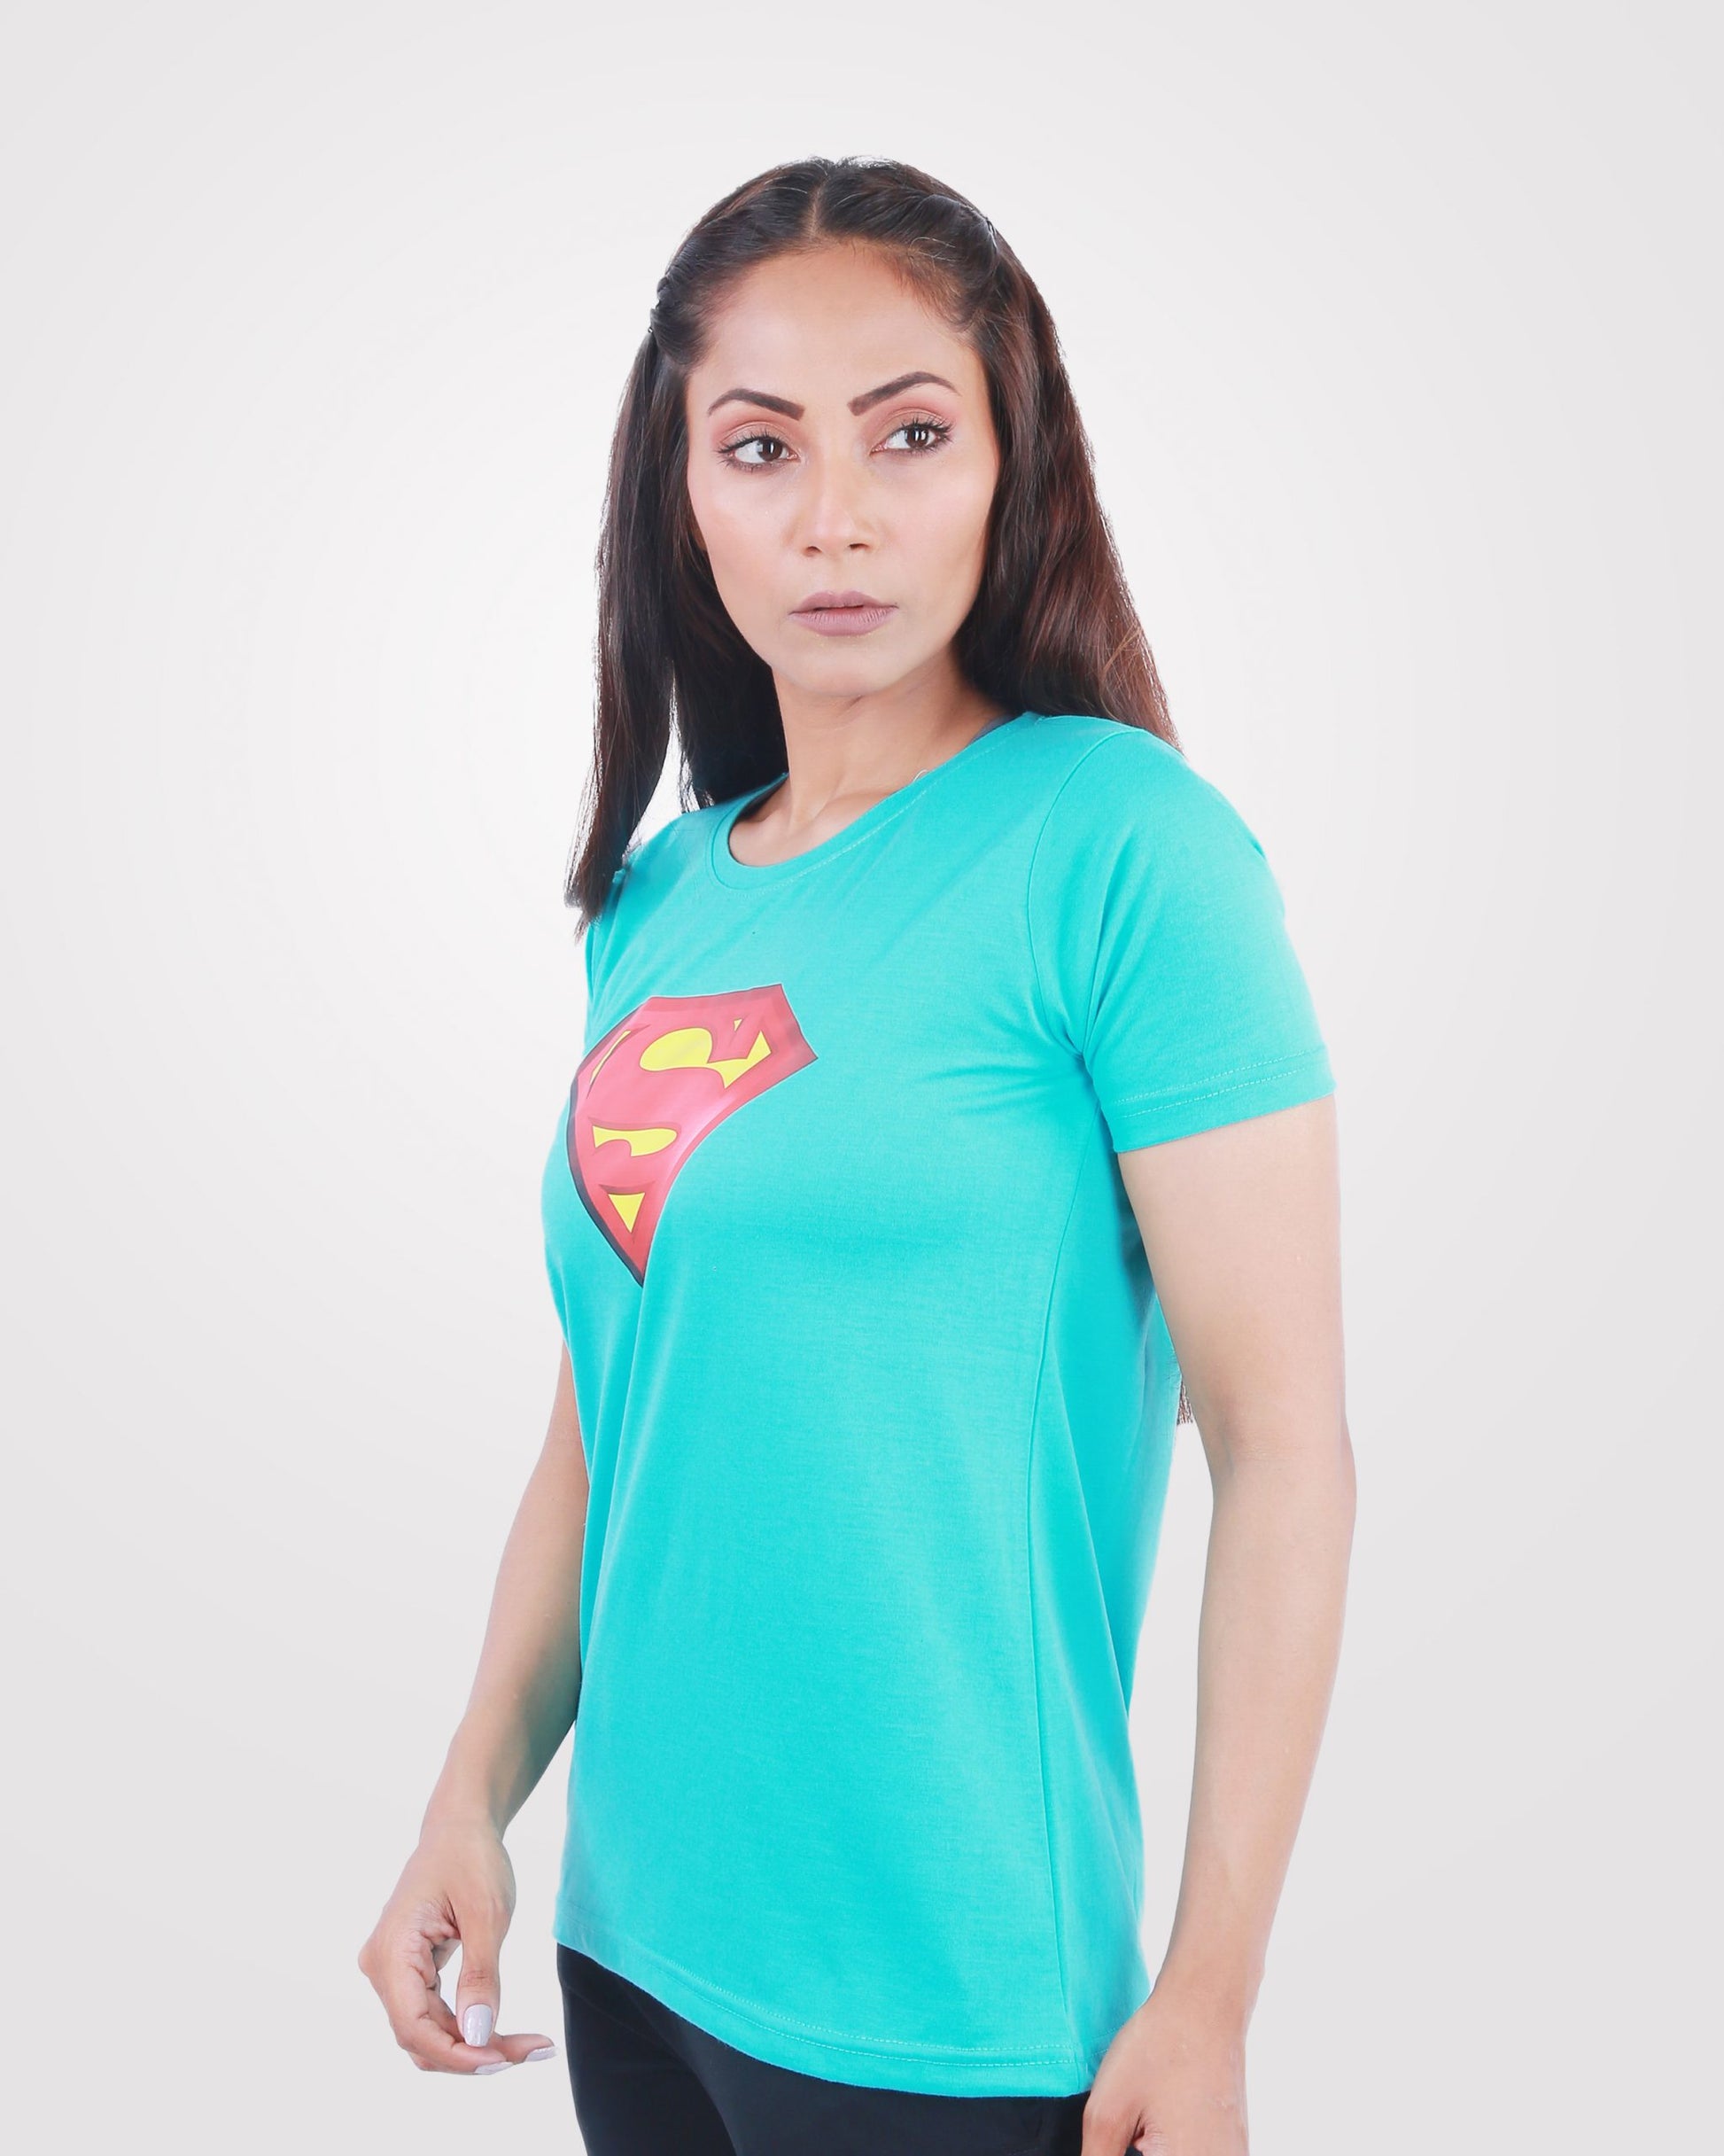 Super Woman T-Shirt - outgearsfitness